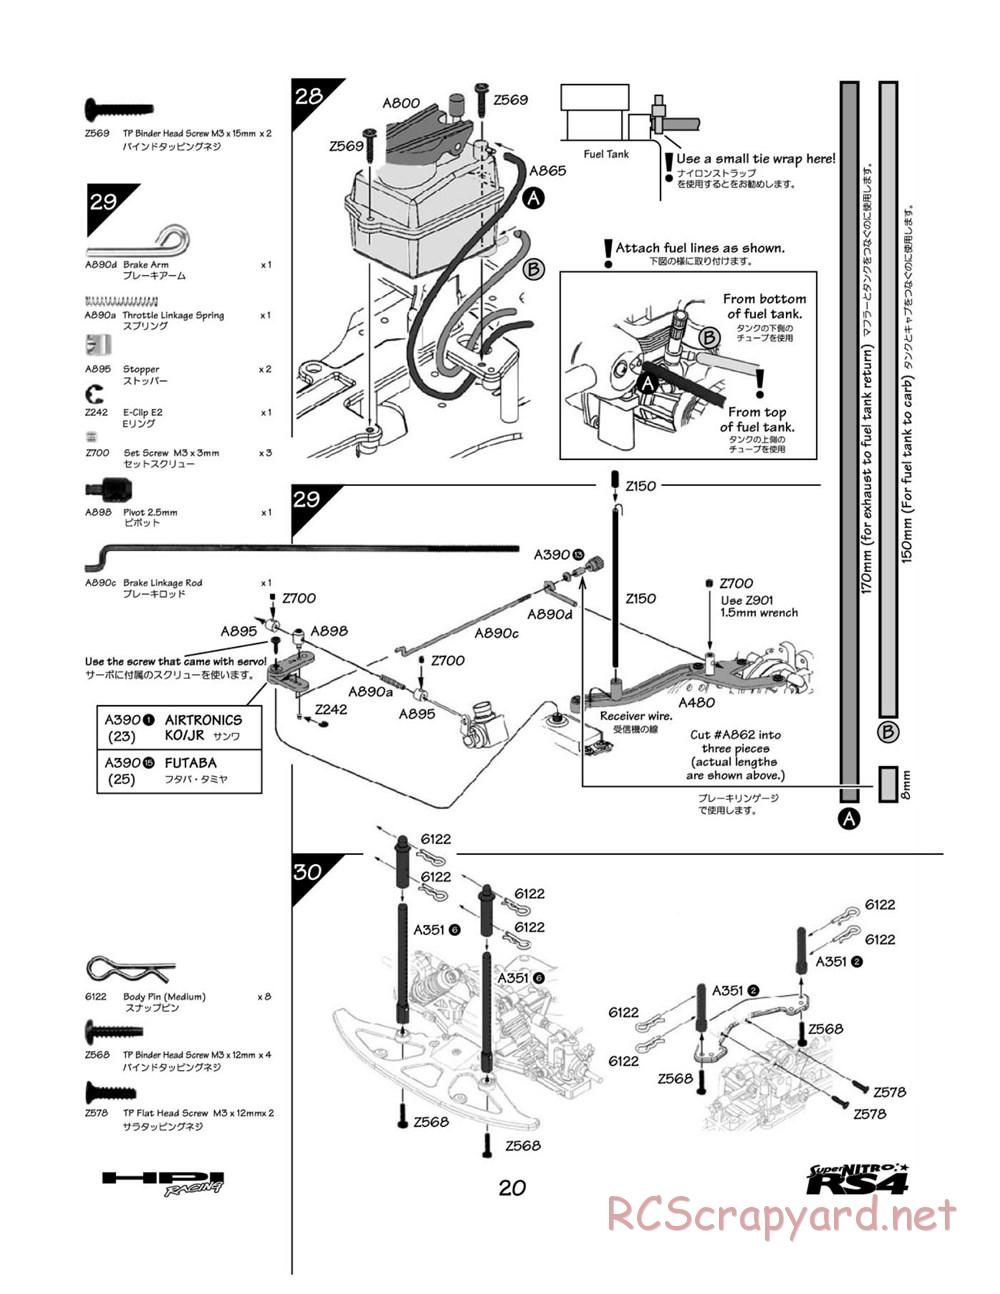 HPI - Super Nitro RS4 - Manual - Page 20